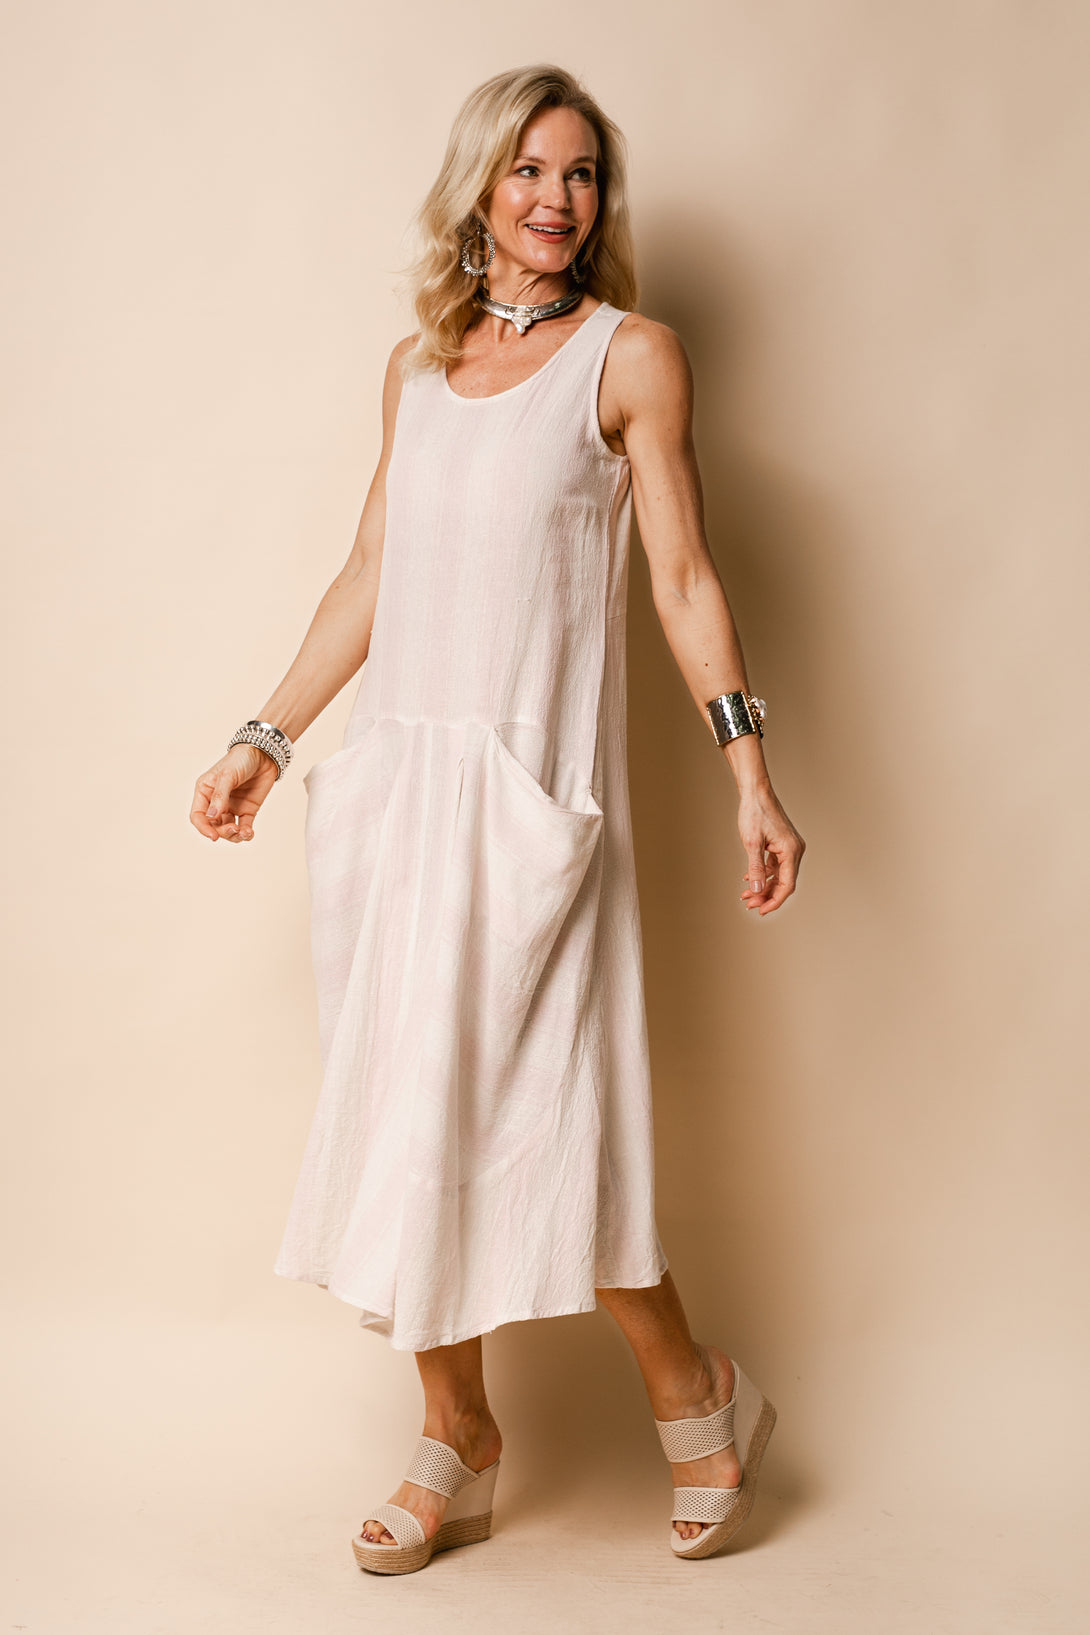 Tiara Cotton Dress in Blush - Imagine Fashion